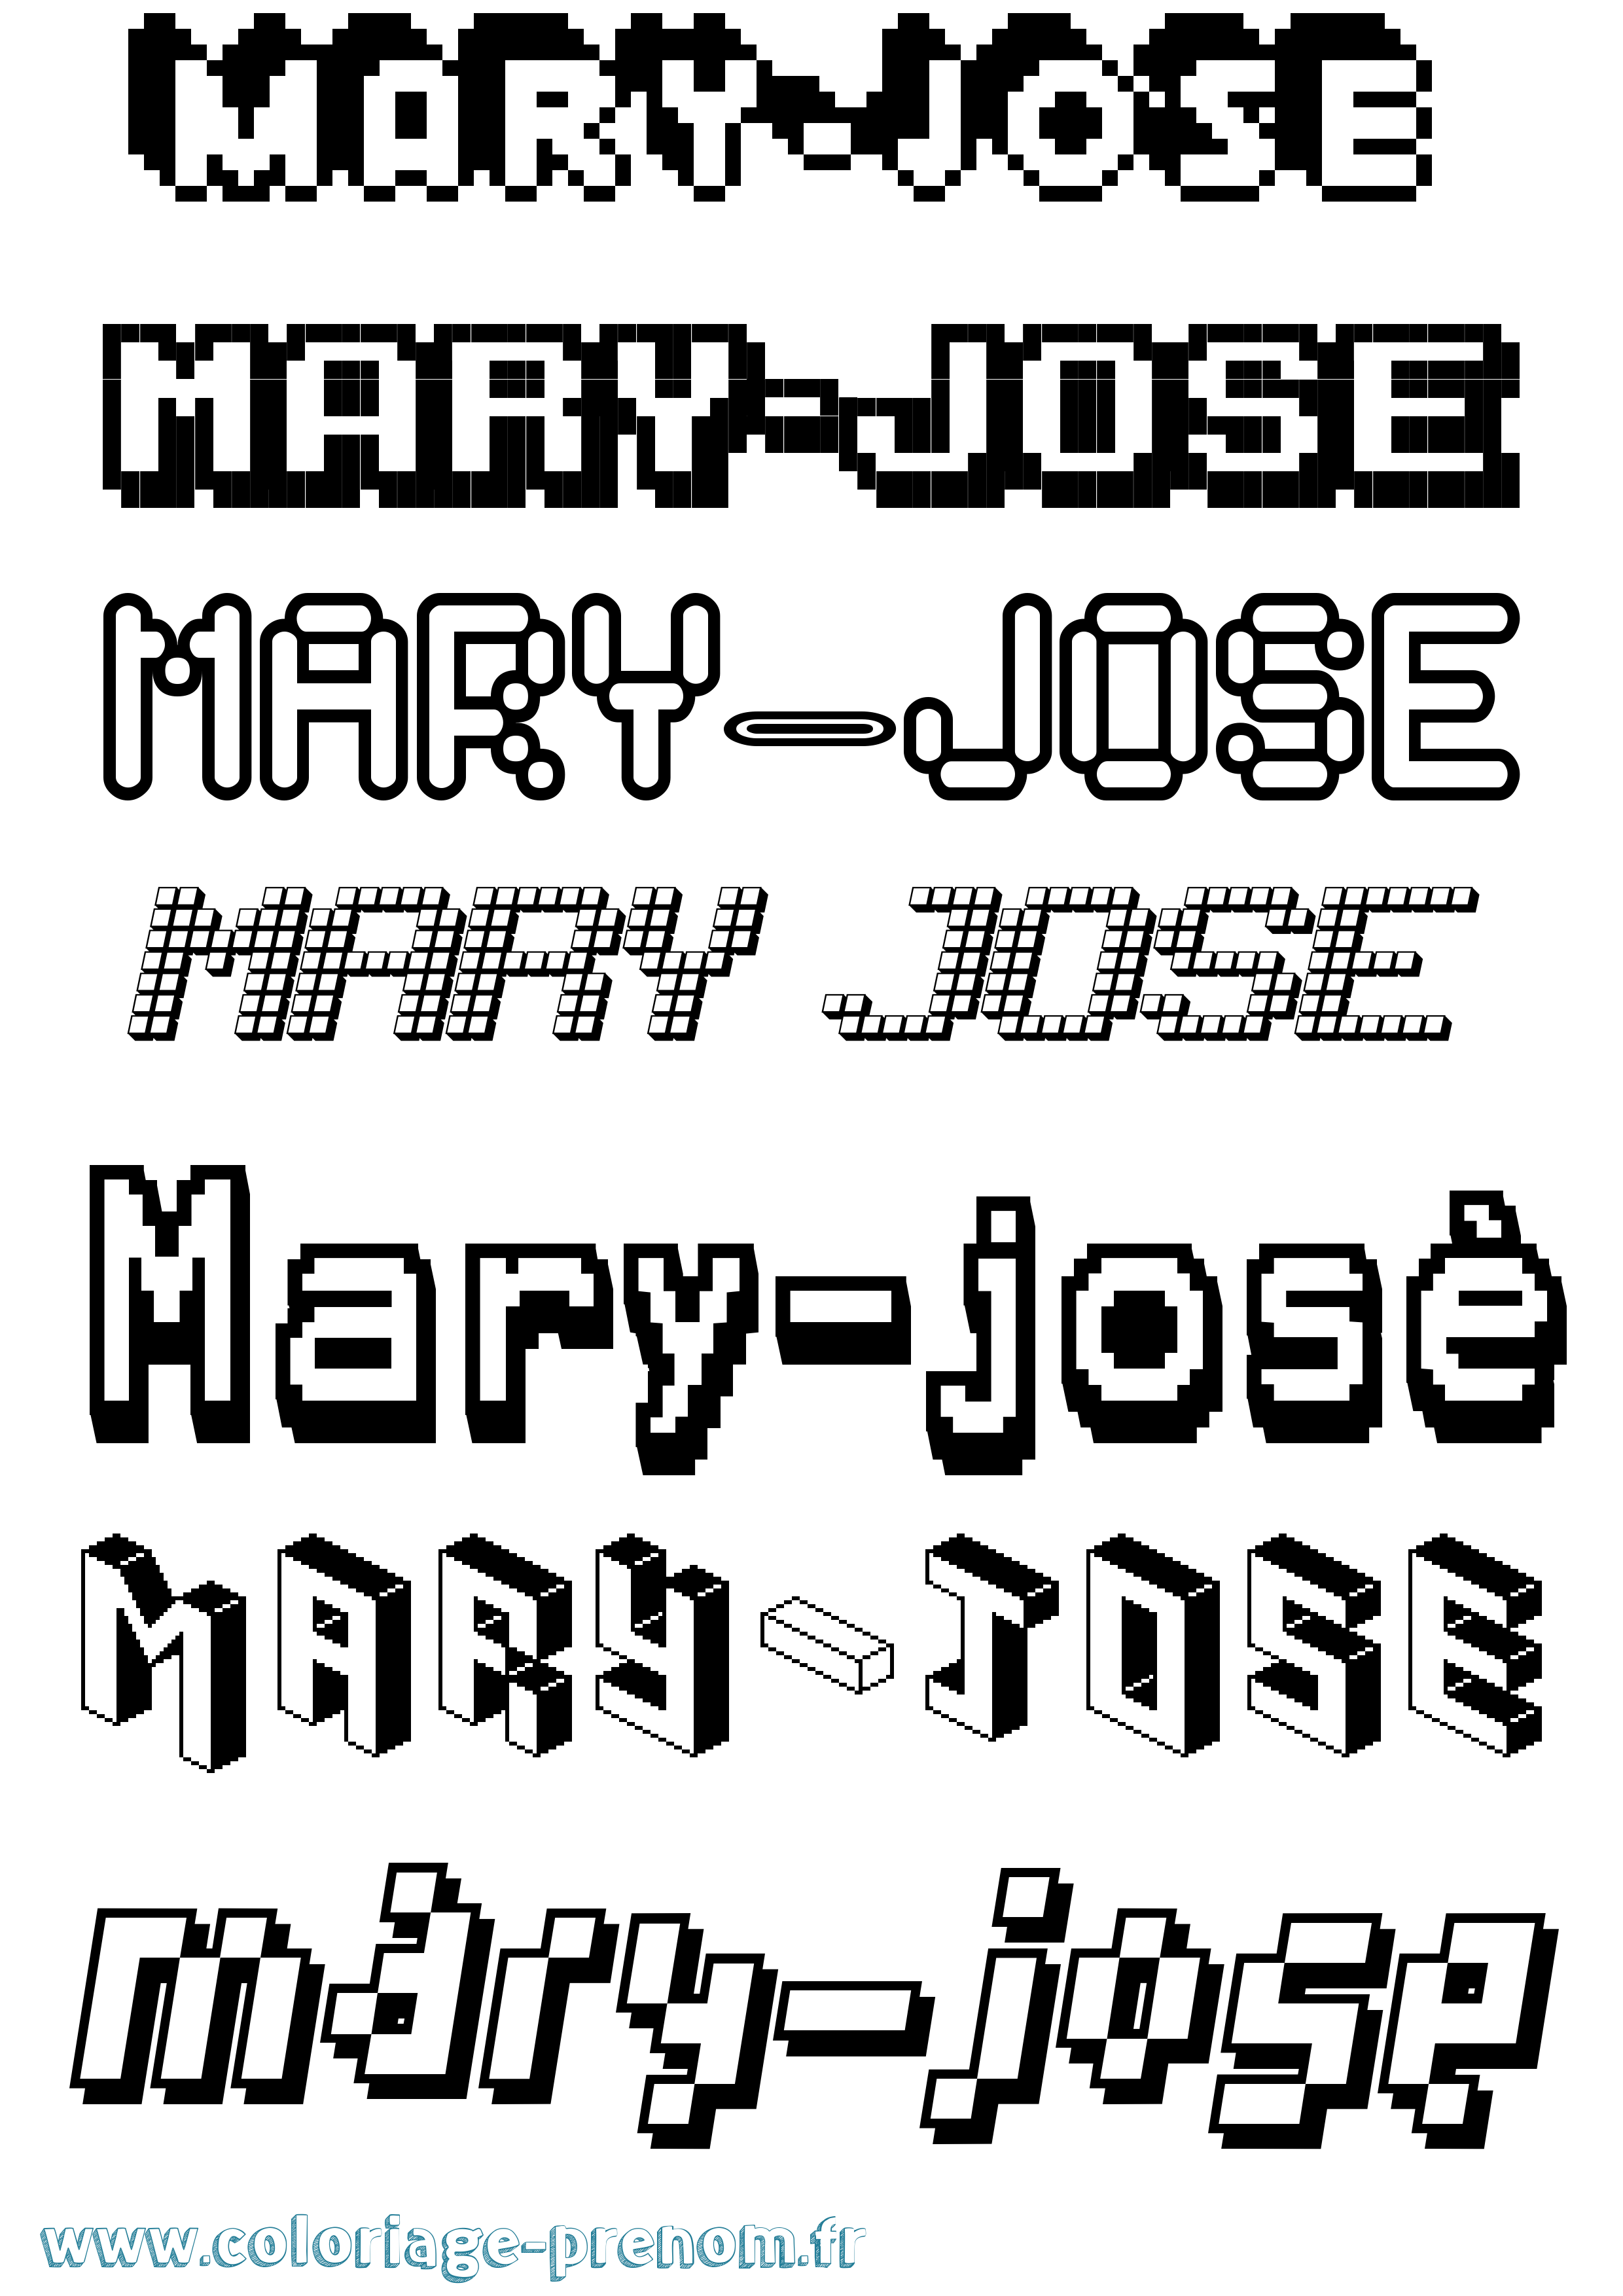 Coloriage prénom Mary-José Pixel